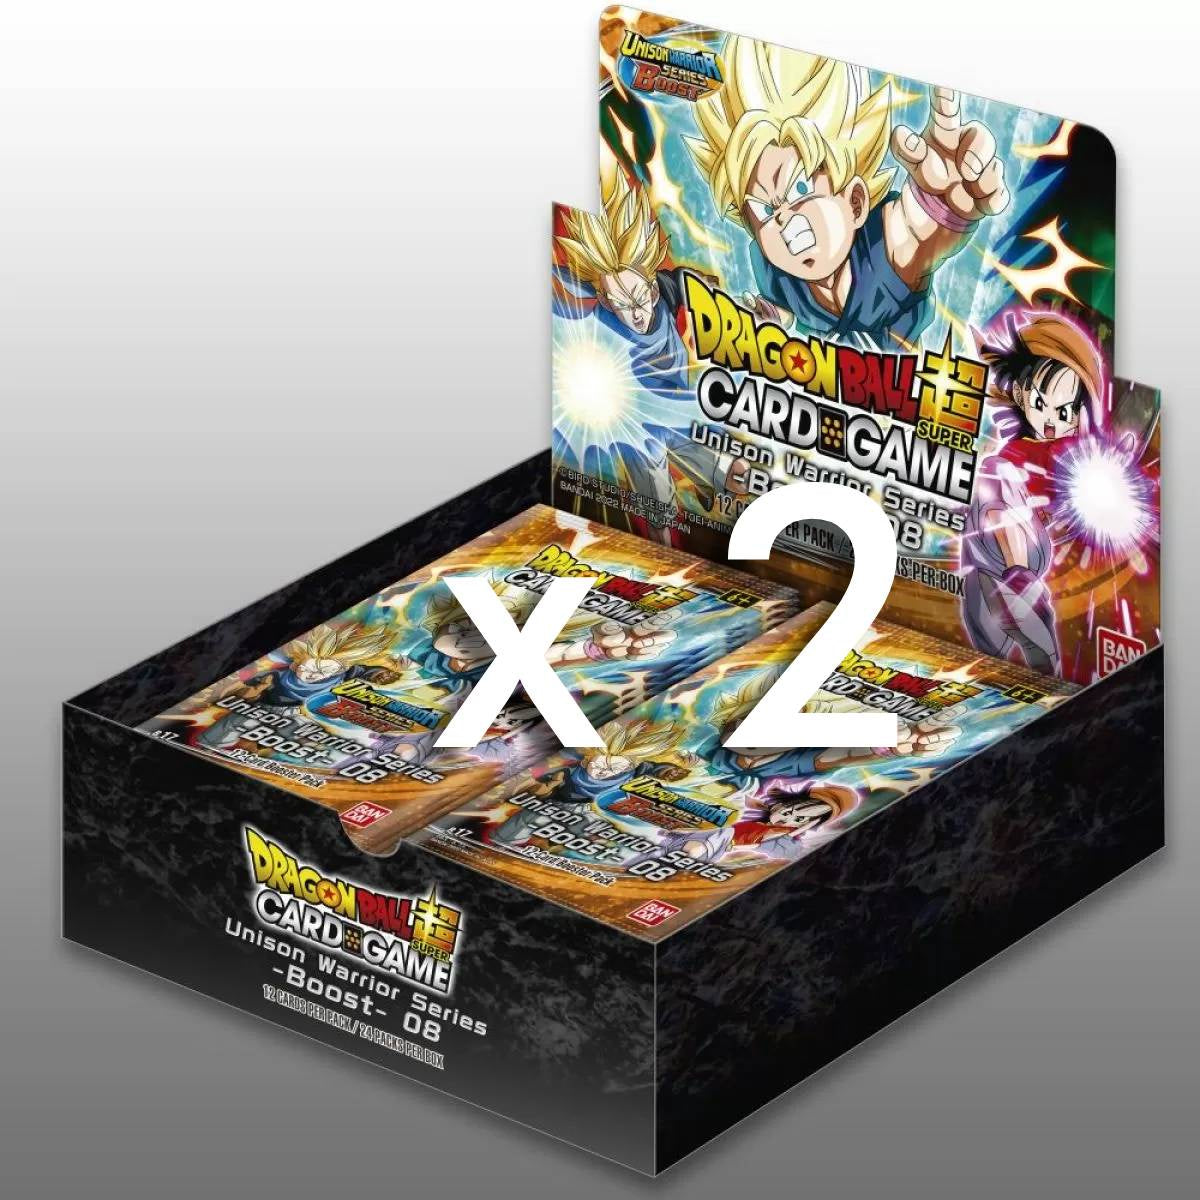 Dragon Ball Super Card Game Series Boost Unison Warrior 08 2 x Booster Boxes [DBS-B17]